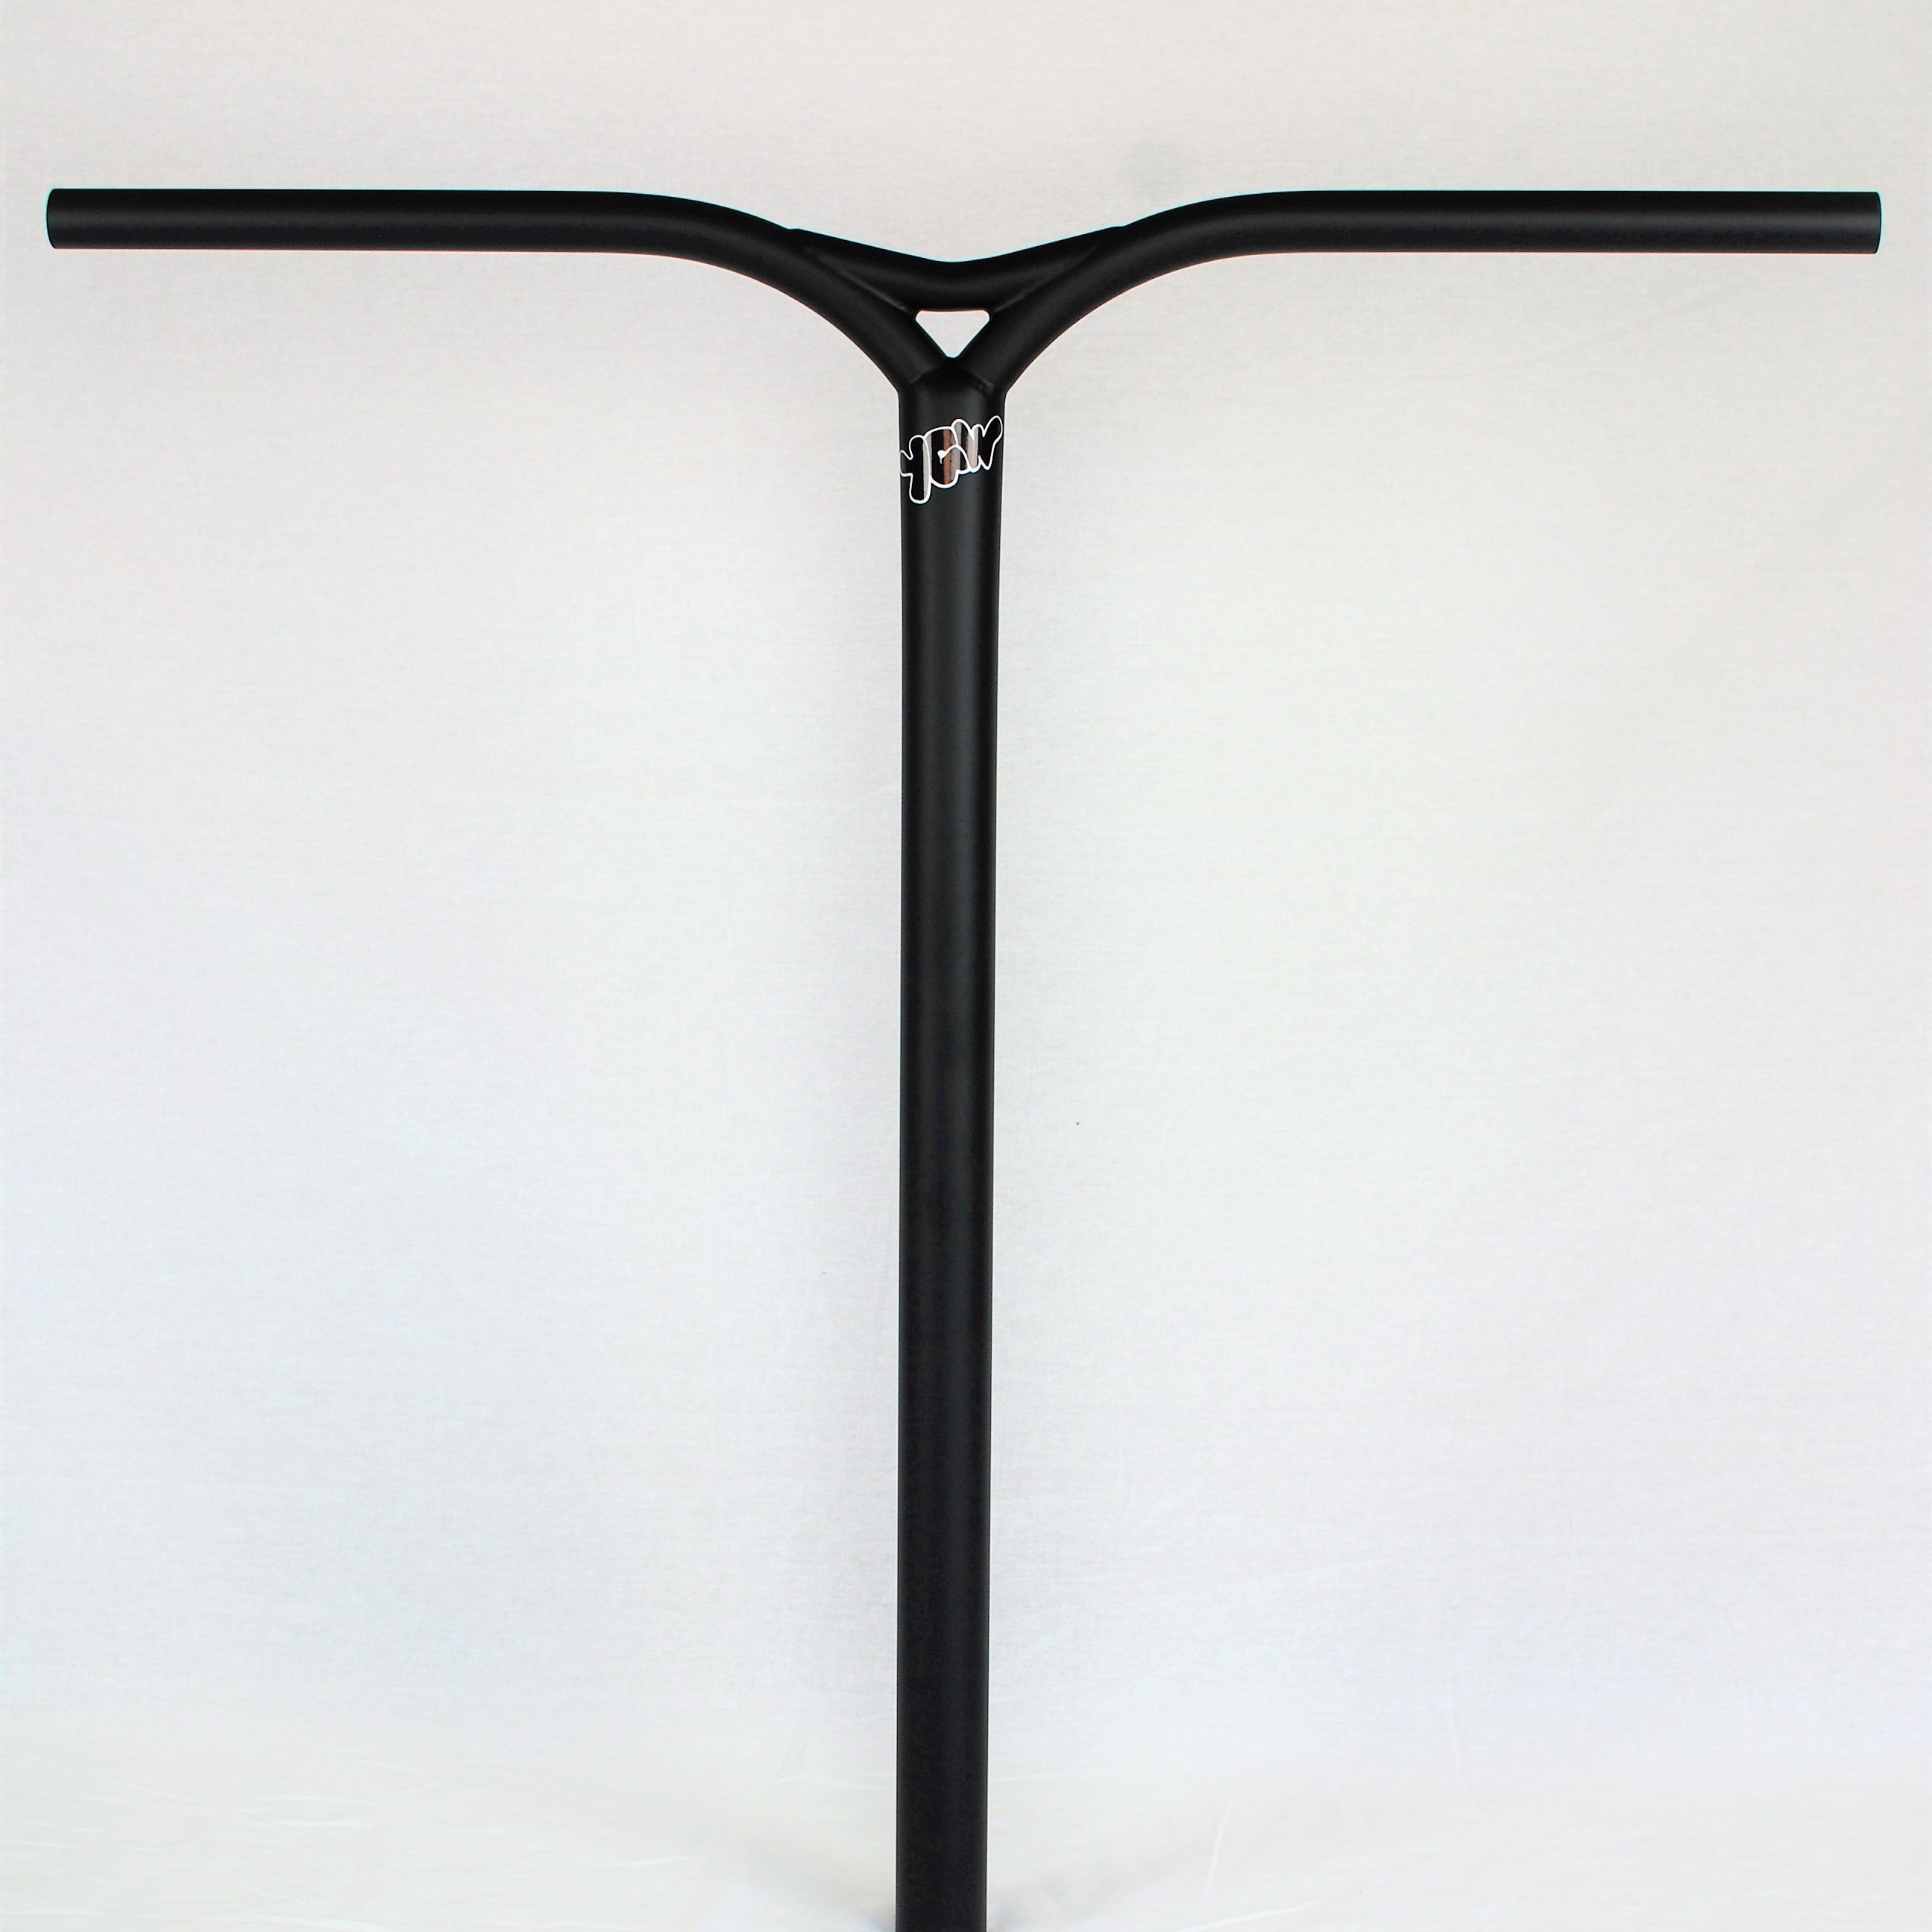 YGW Millennium Standard, Scooter Bars, Flat Black